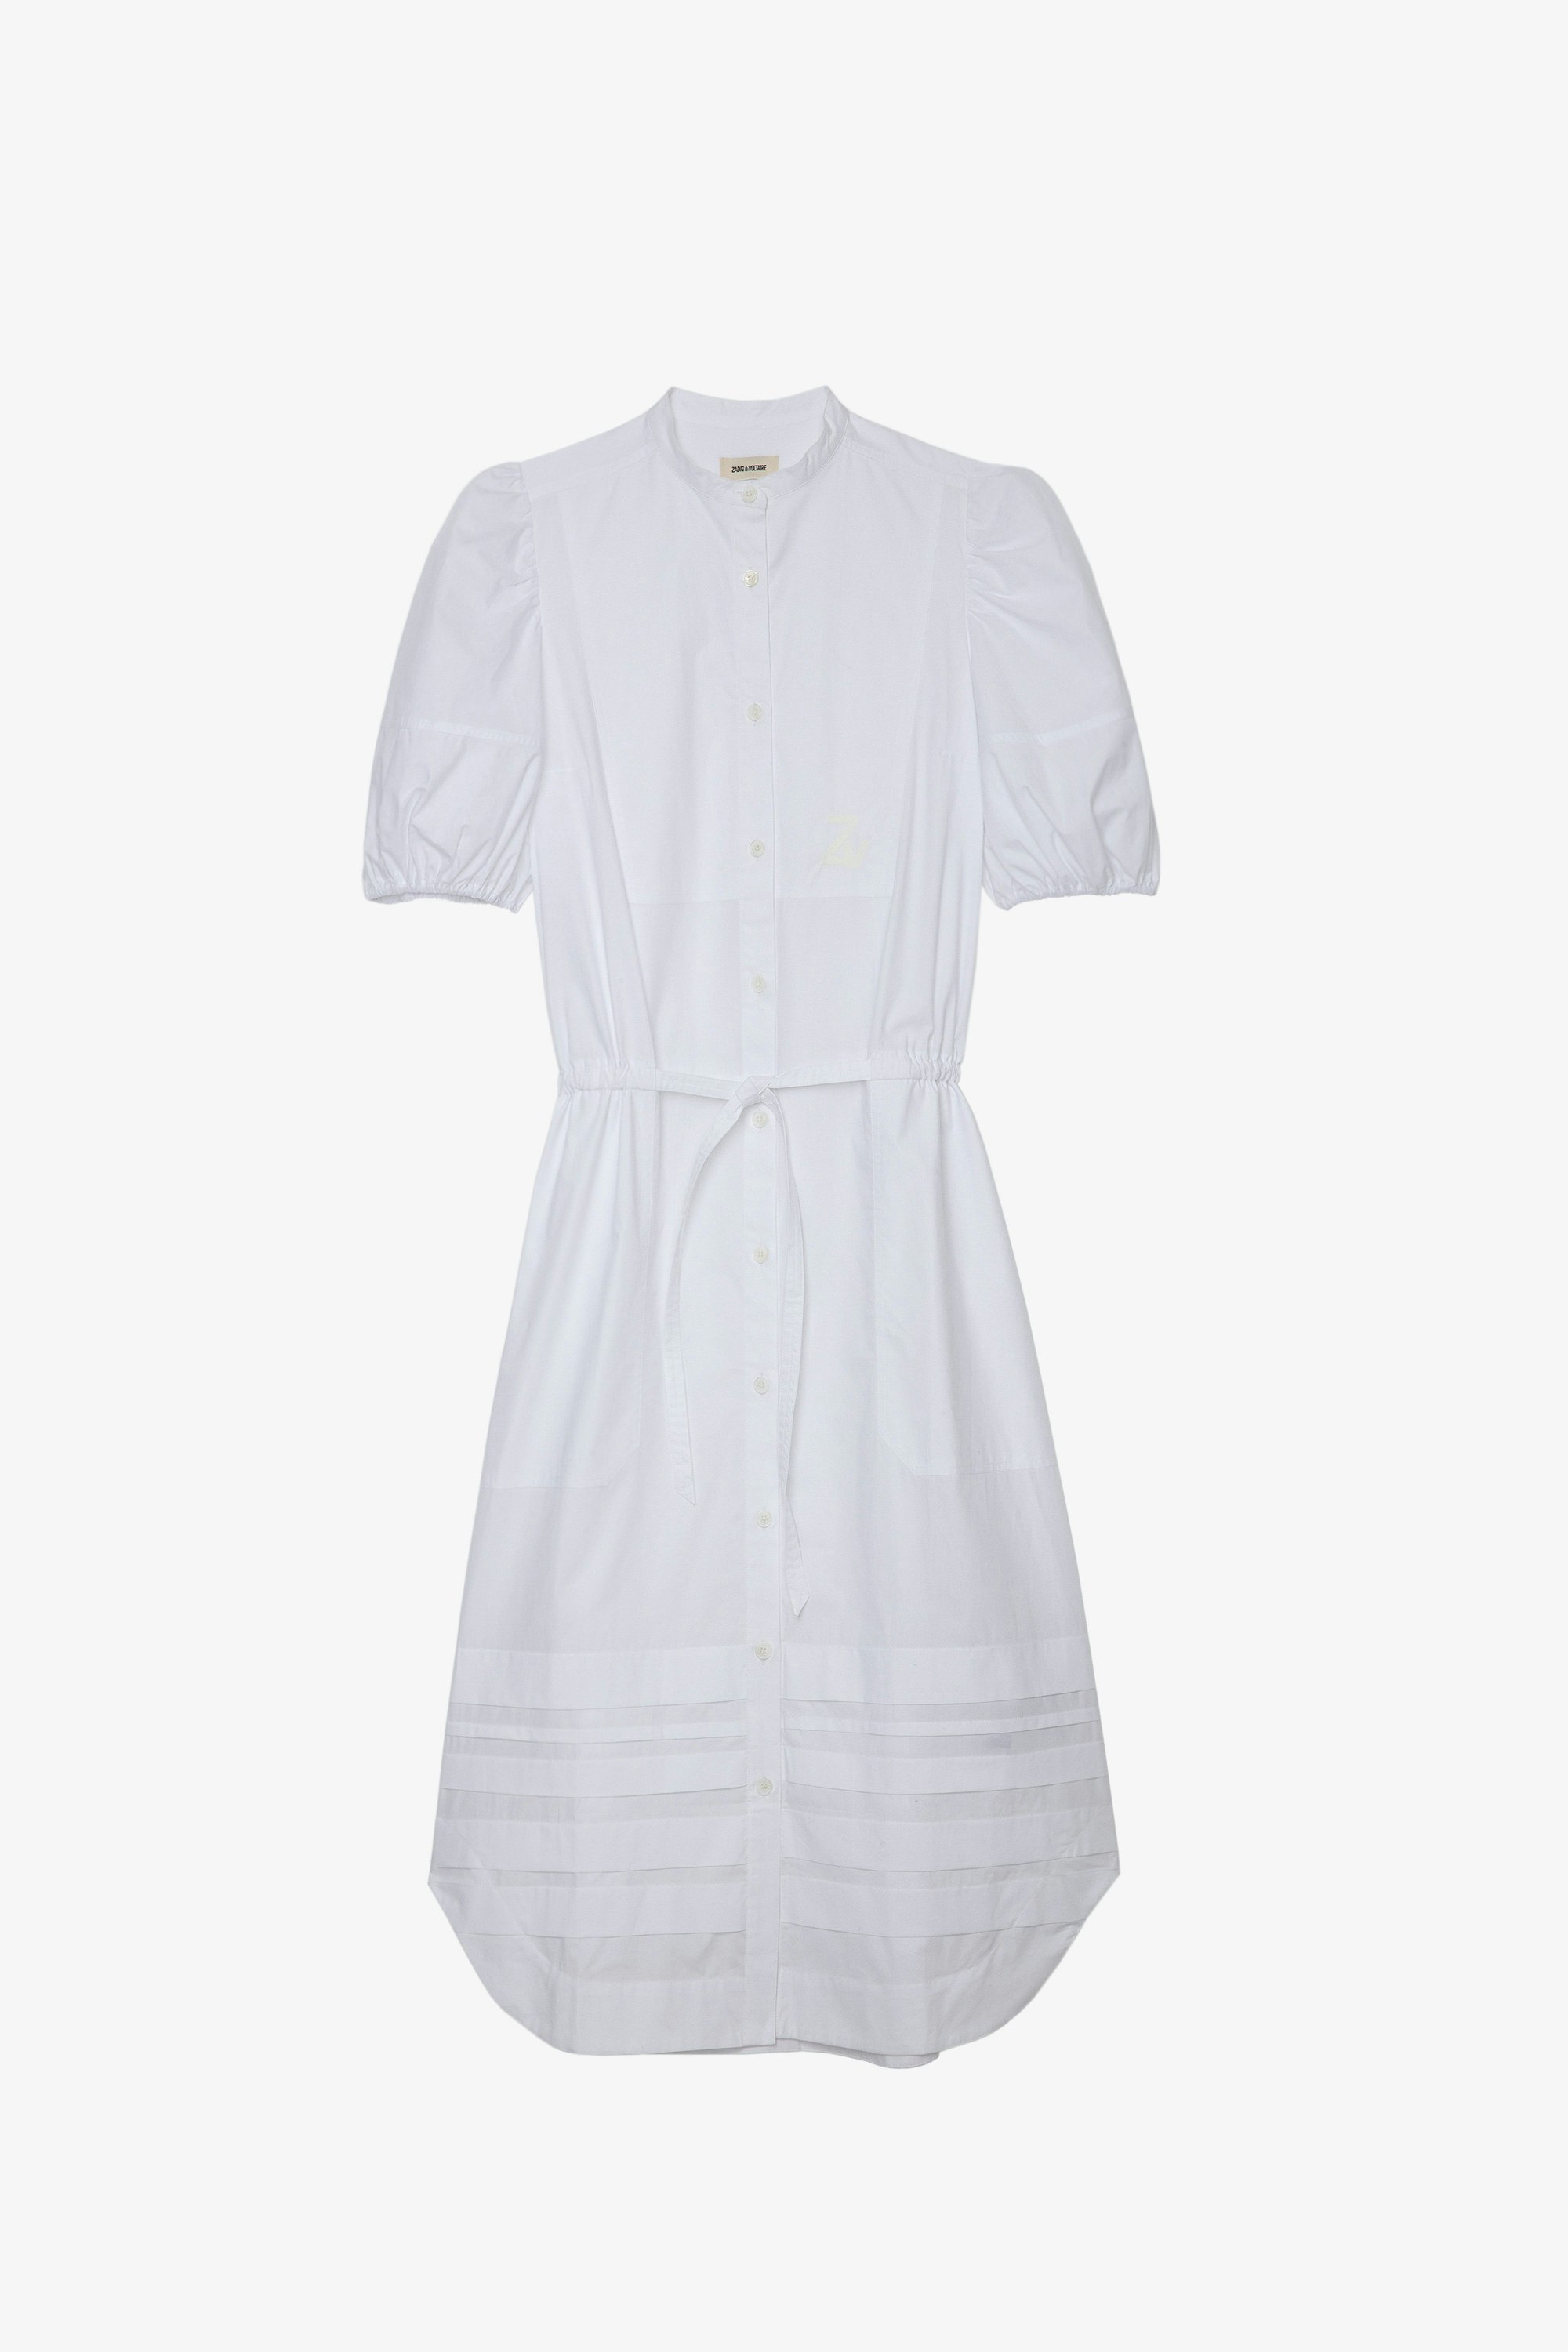 Ryana Pop Dress Women’s white cotton mid-length dress 